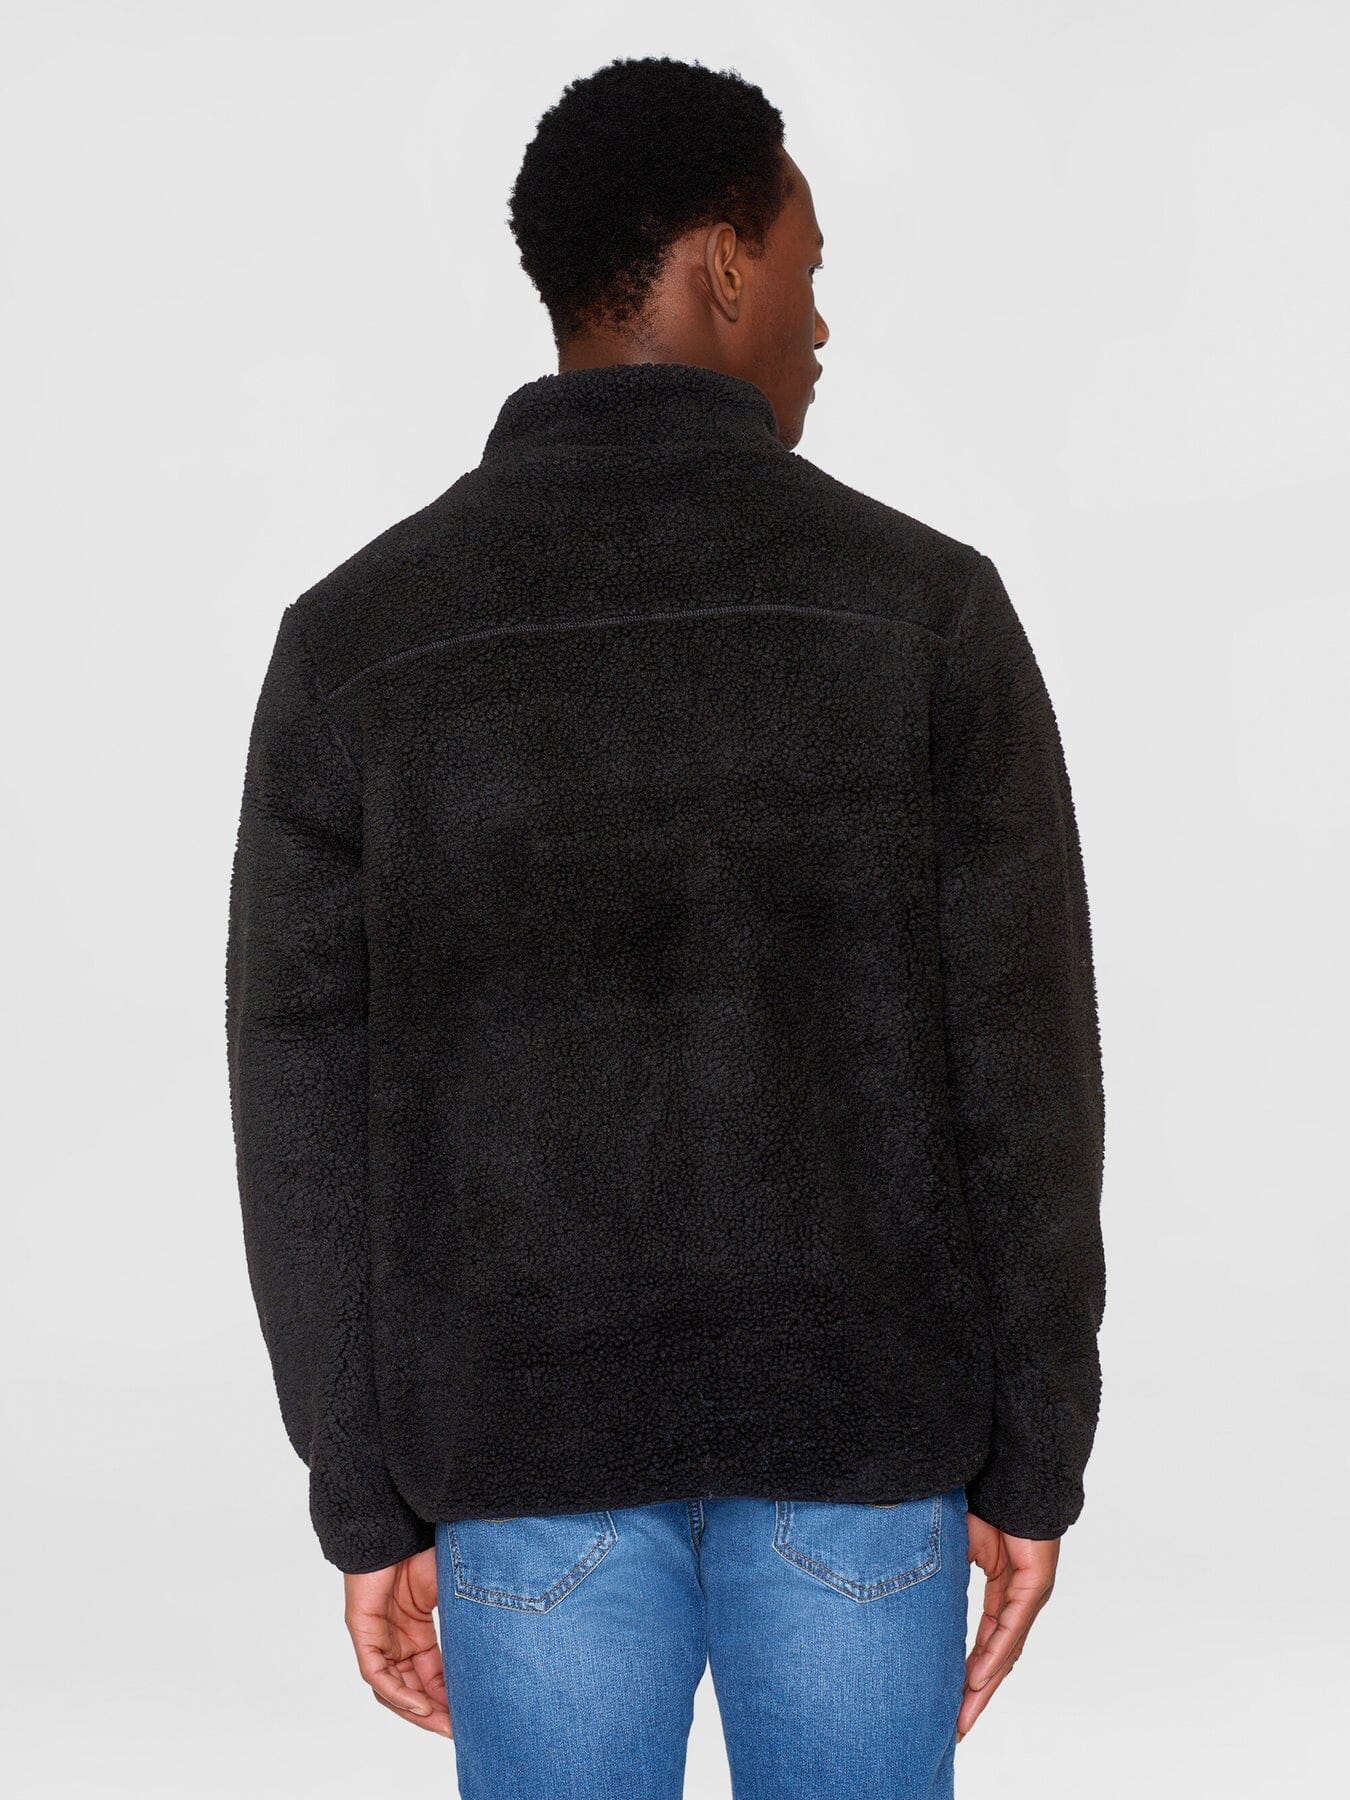 KnowledgeCotton Apparel M's Teddy fleece zip jacket - 100% Recycled PET Black Jet Jacket